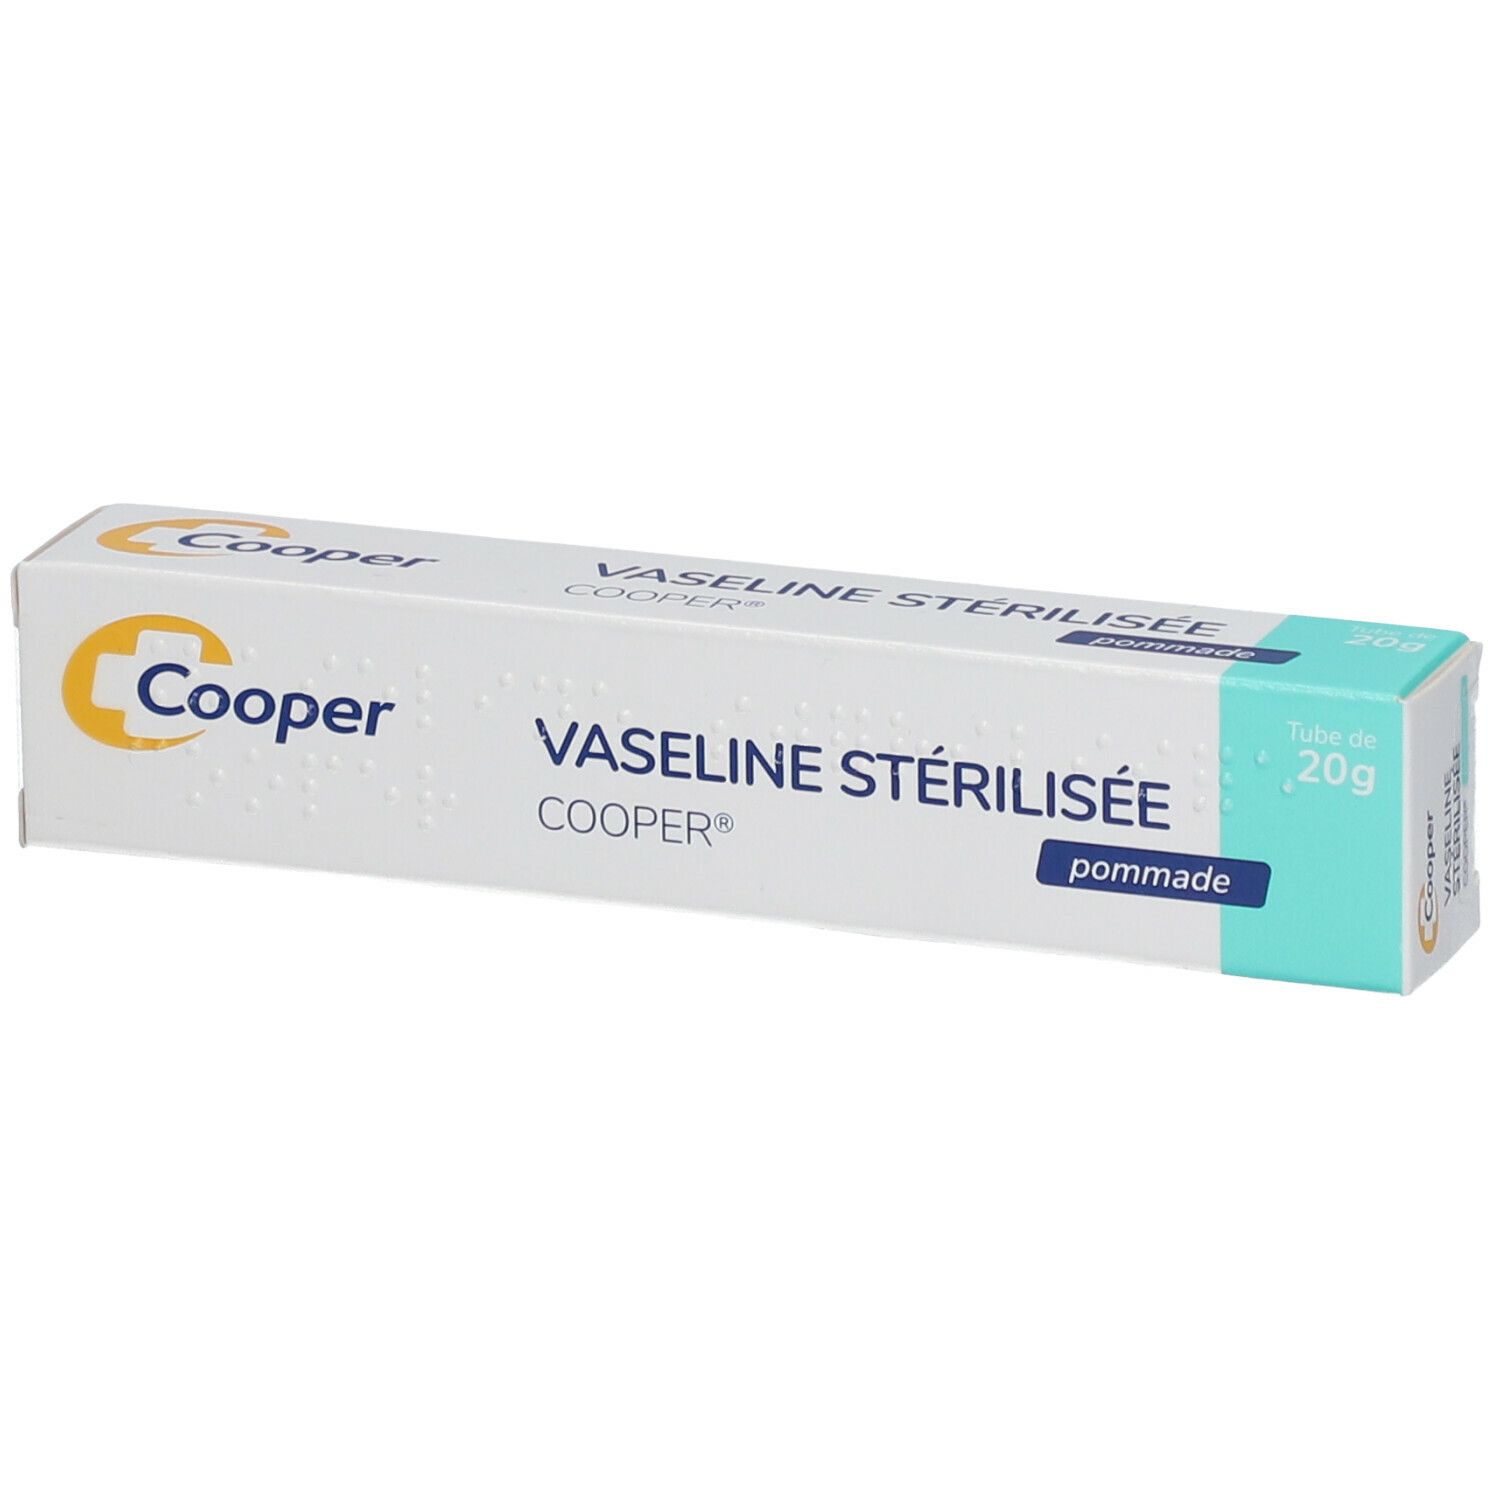 Vaseline stérilisée Cooper - Pommade stérile - Plaie, cicatrice